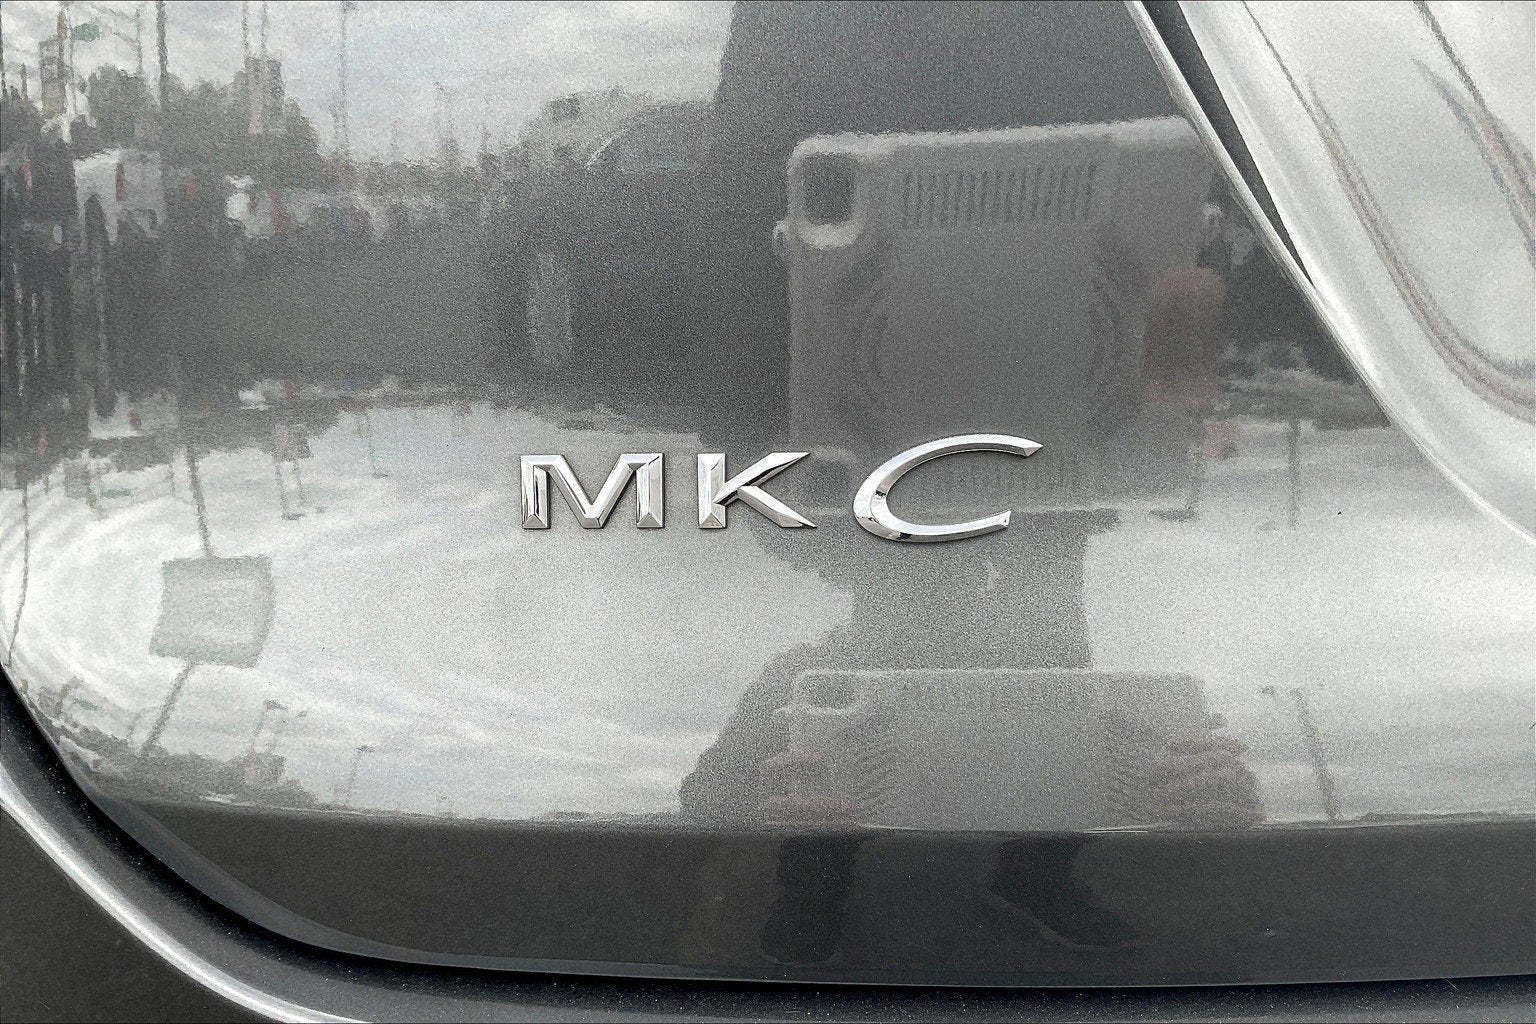 2017 Lincoln MKC Select